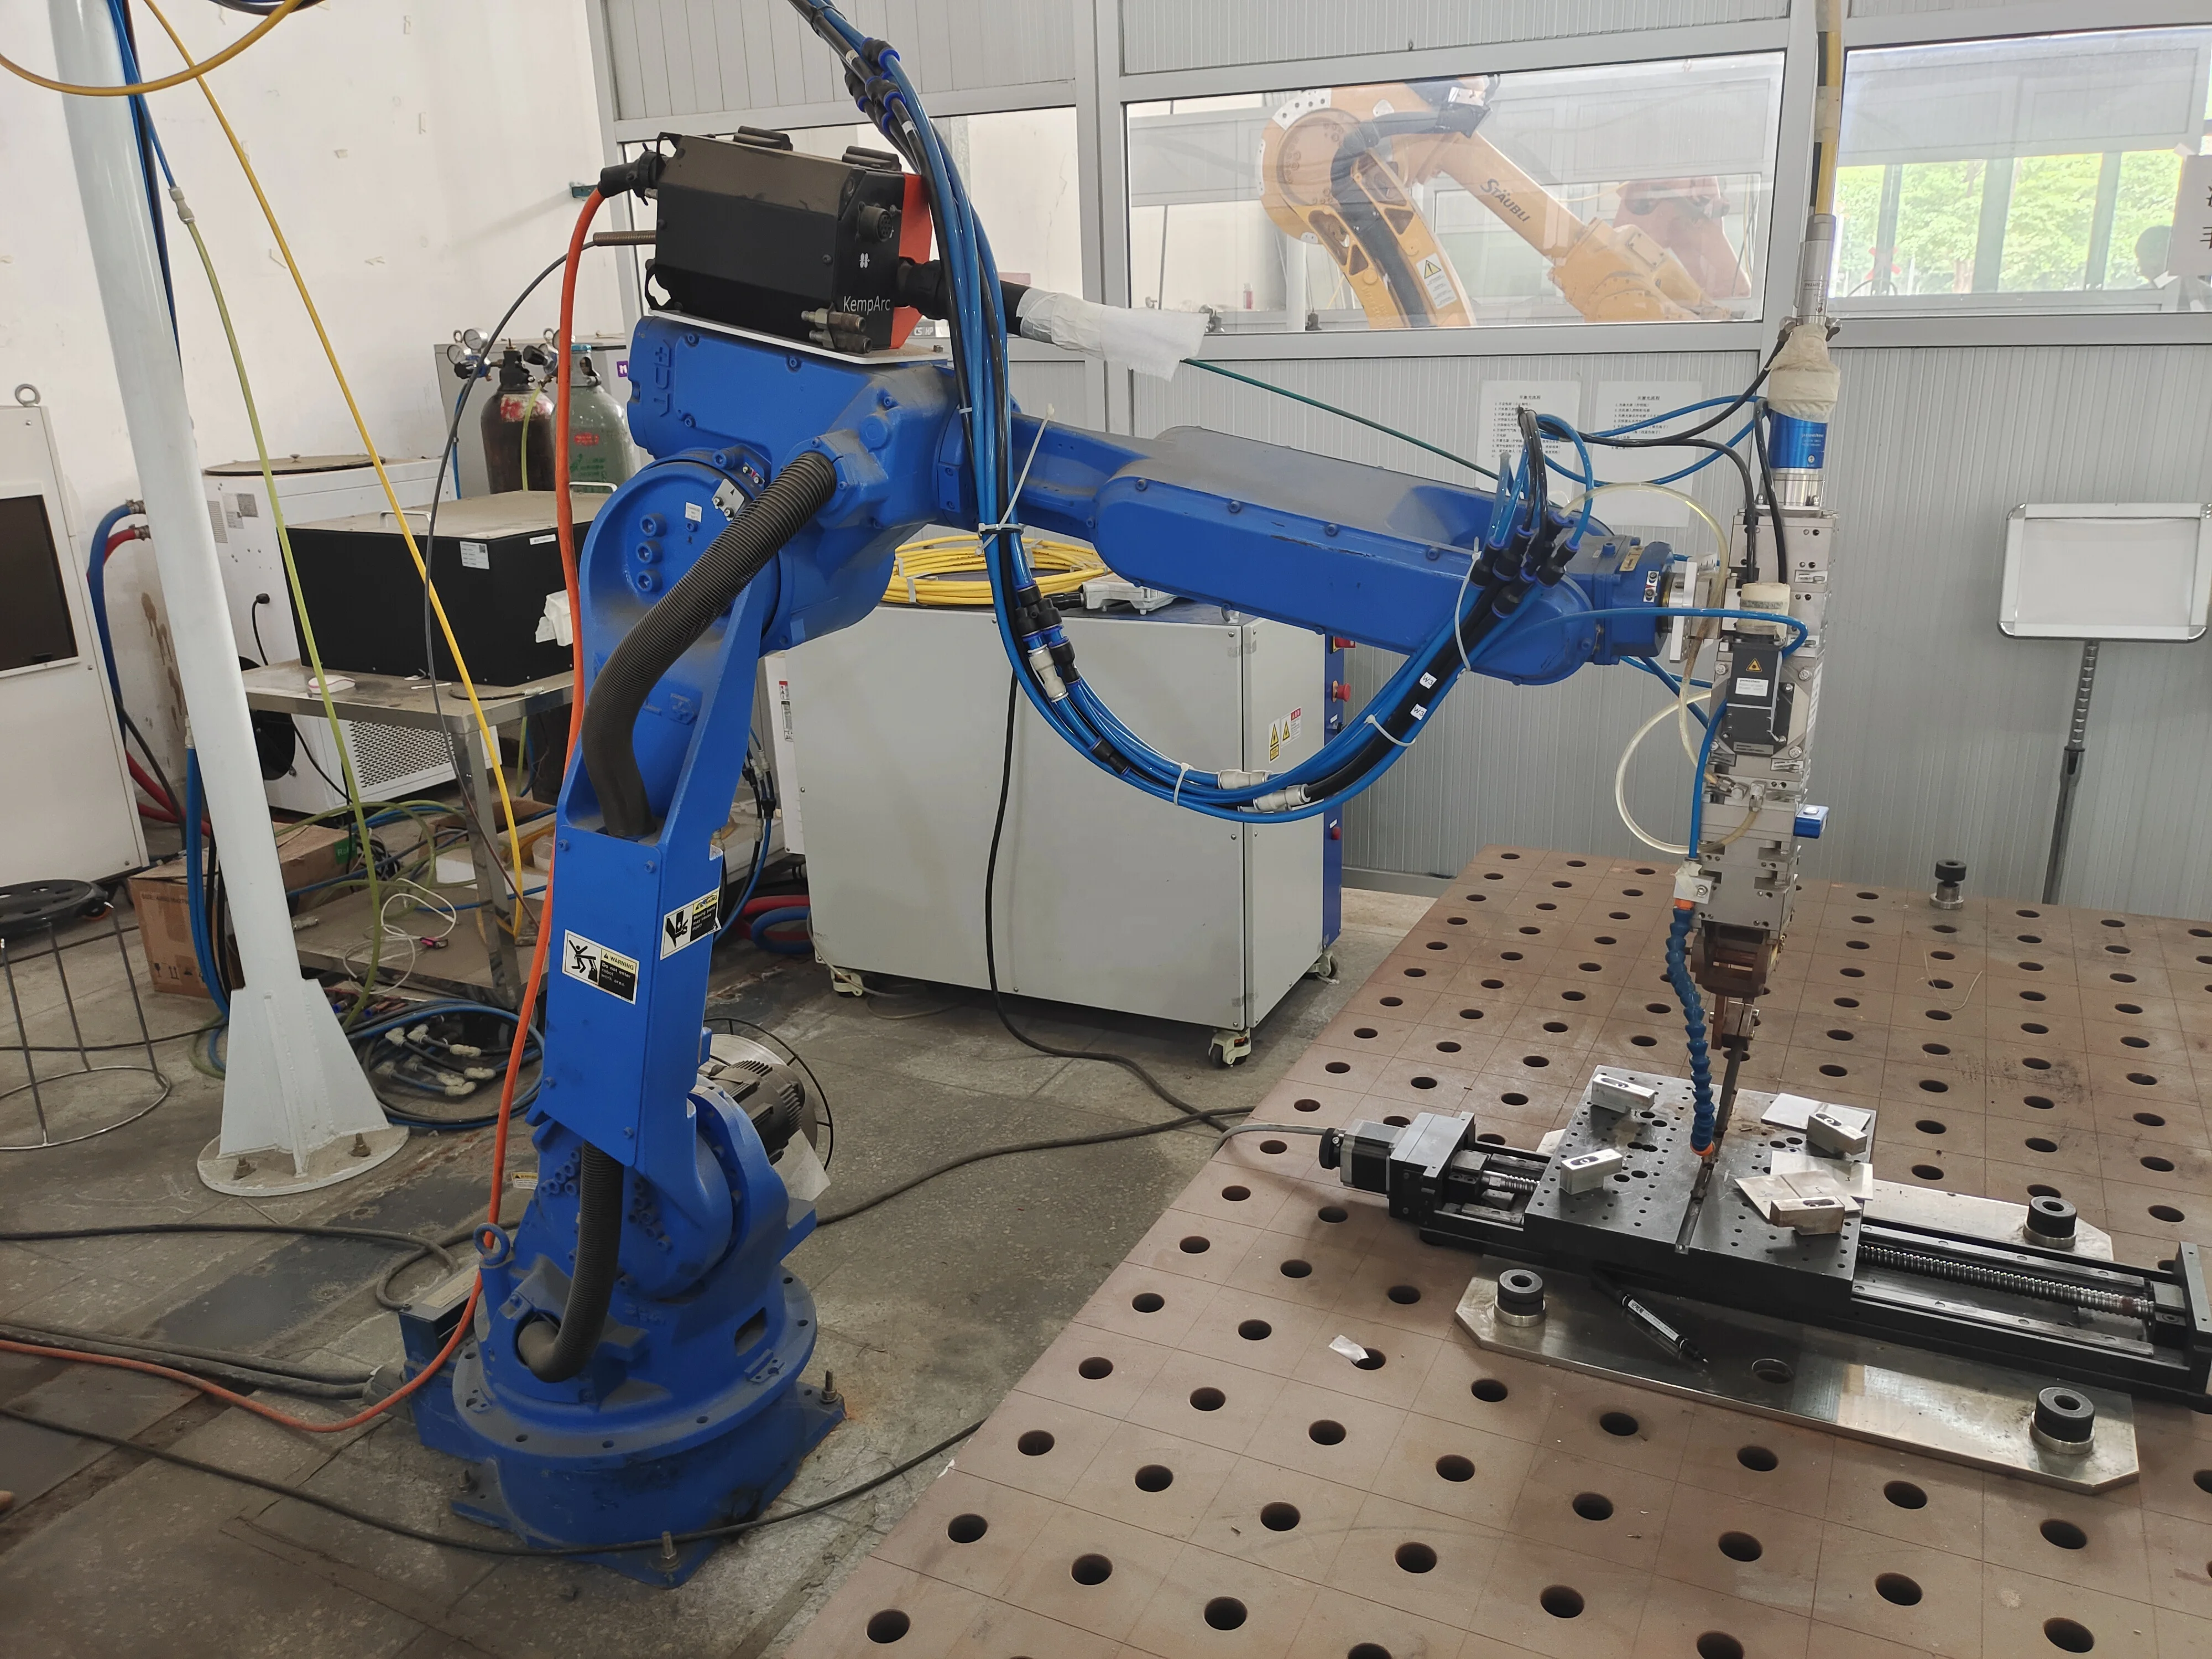 Yaskawa industrial 6 axis laser welding robot machine for Shower head teapot